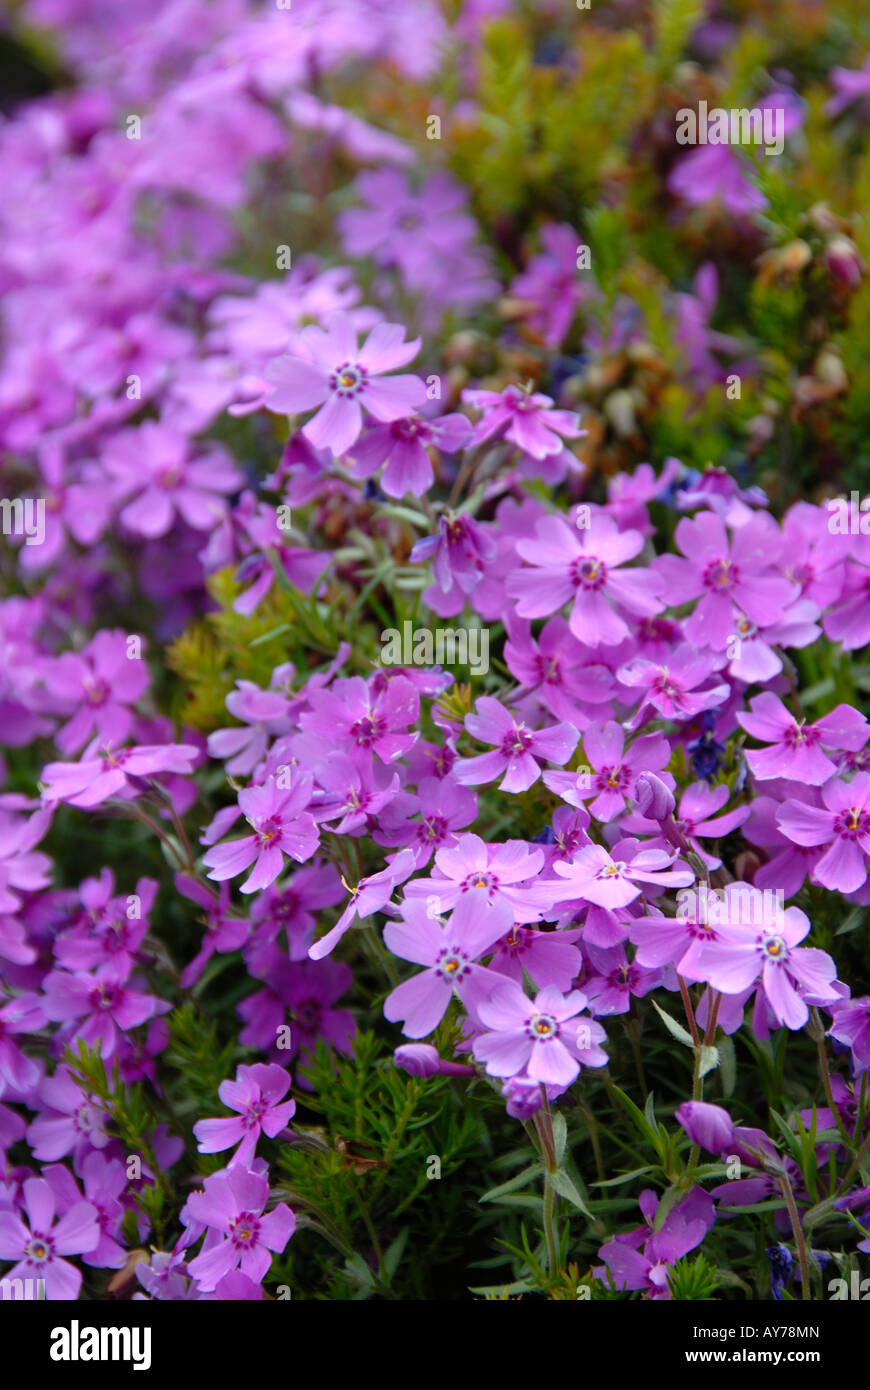 Flowering violet Phlox Stock Photo